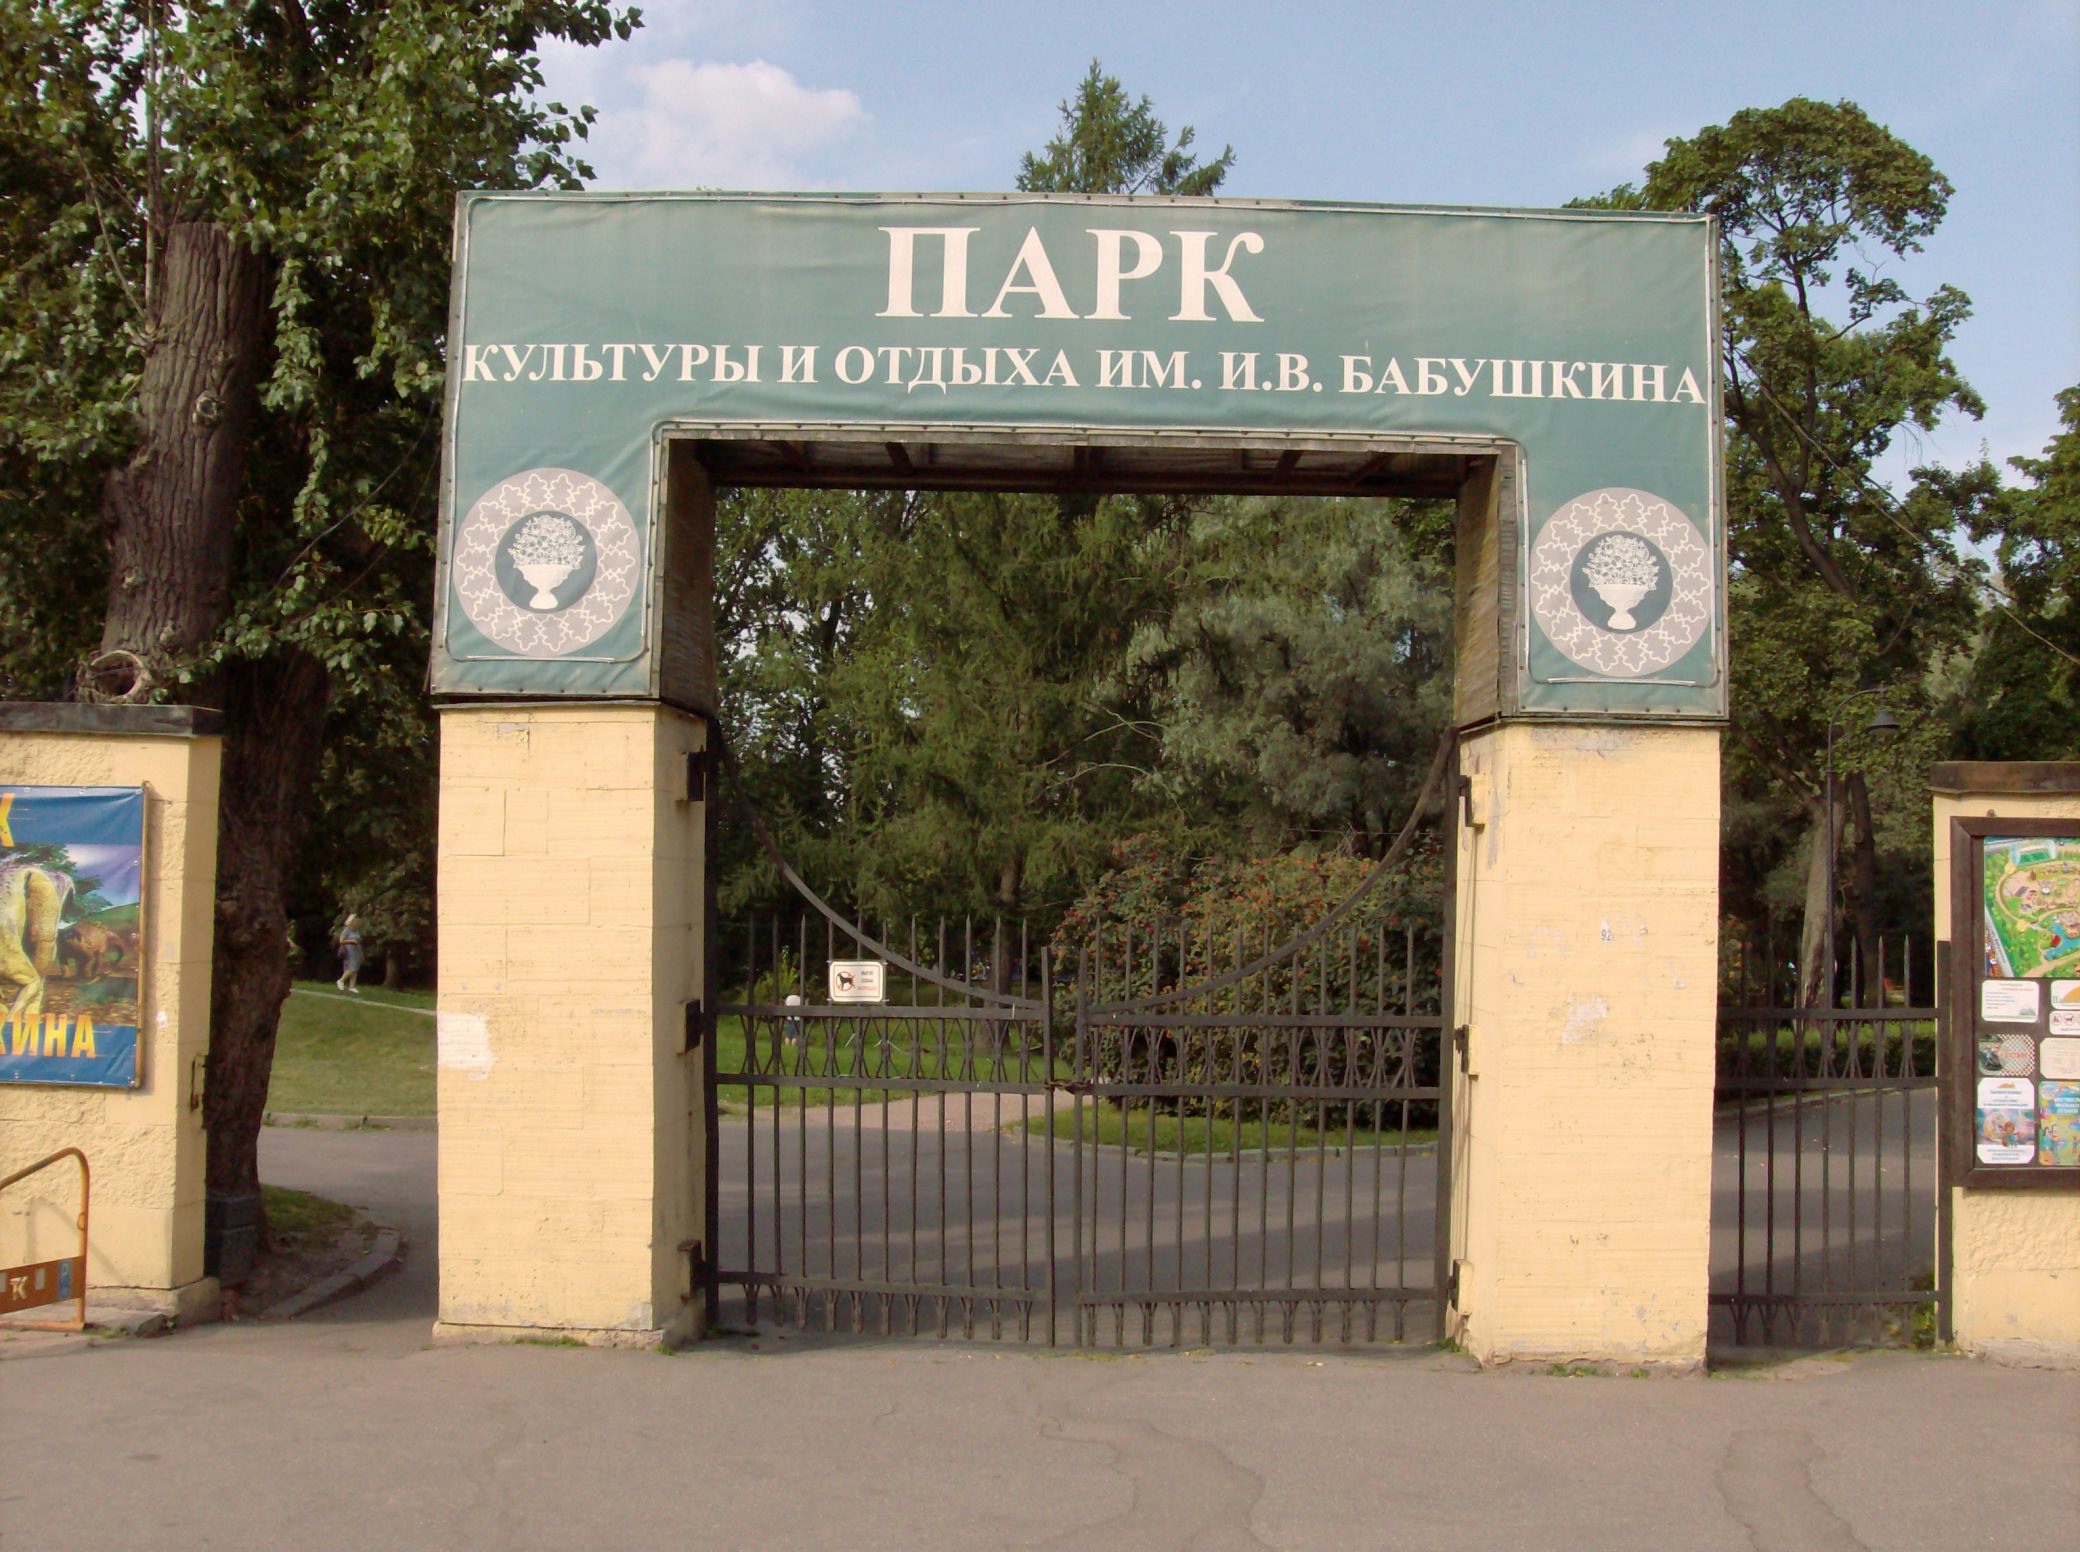 Babushkina Park